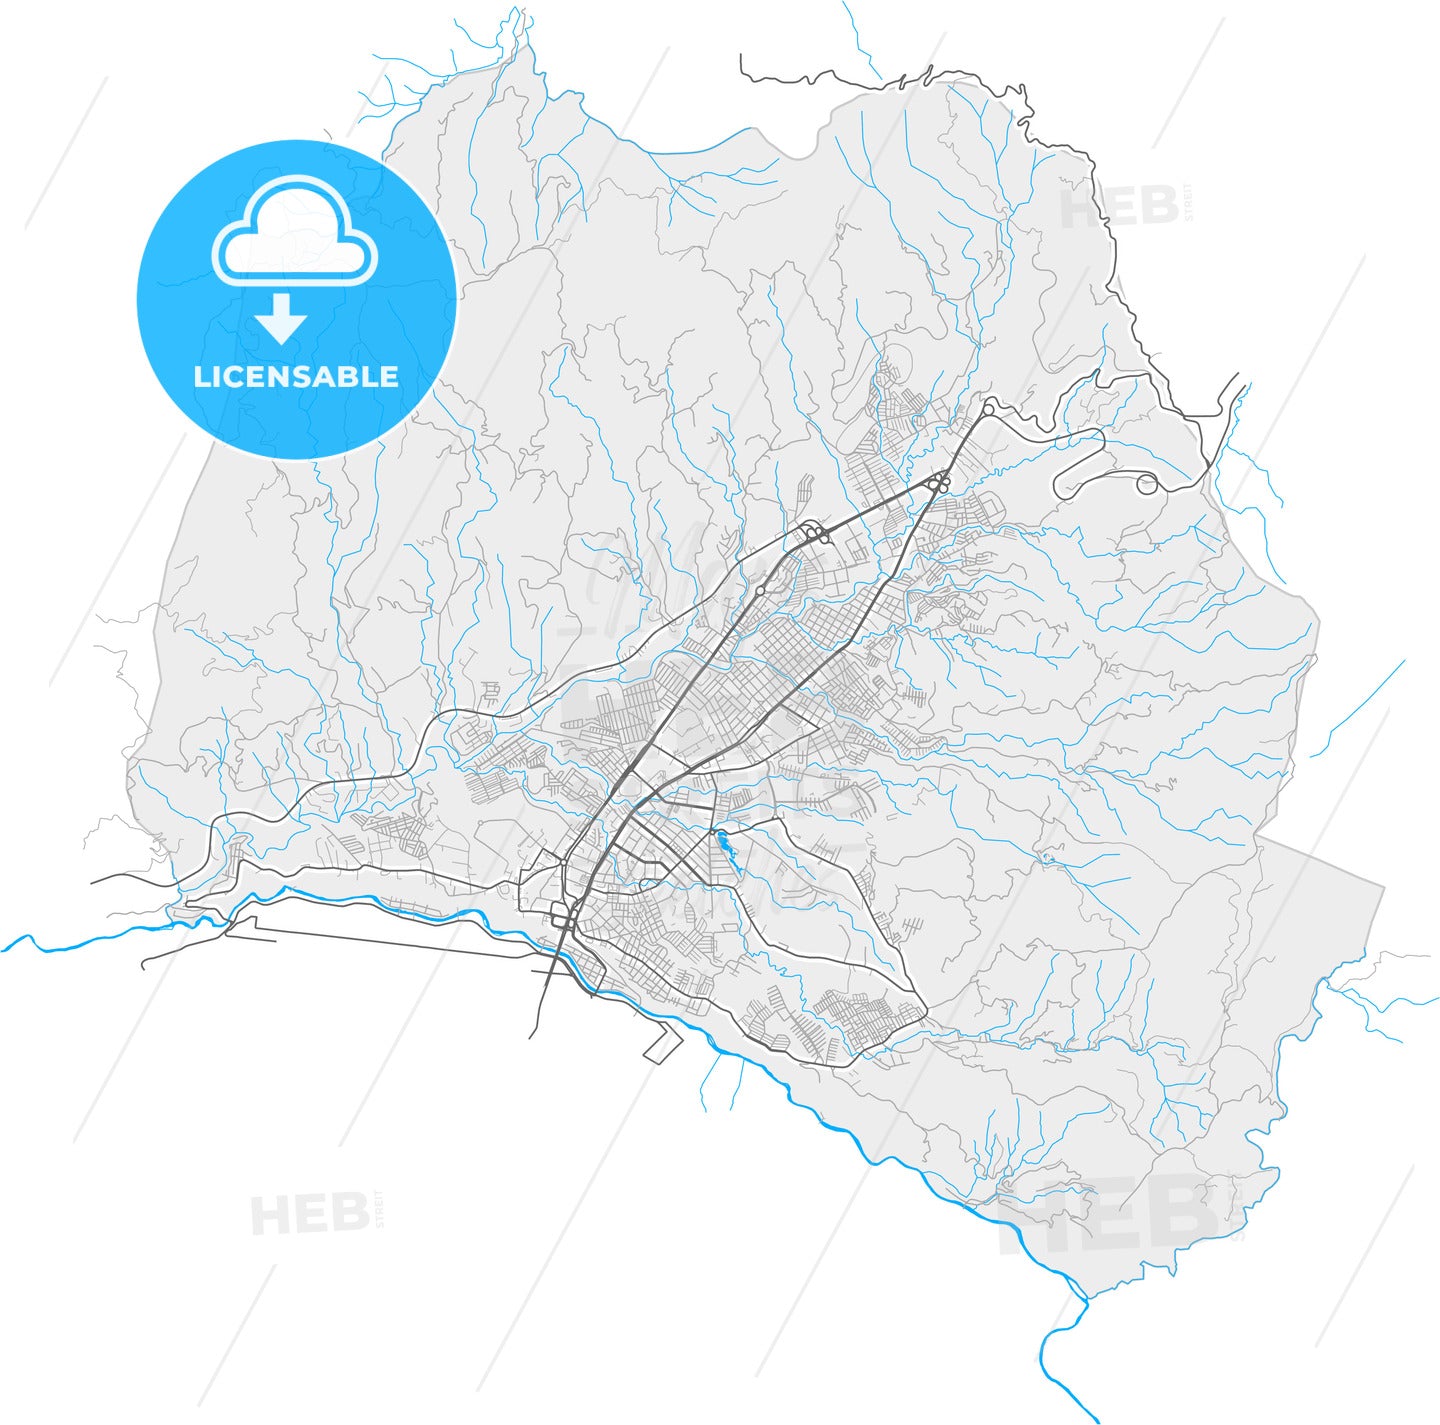 Dosquebradas, Colombia, high quality vector map